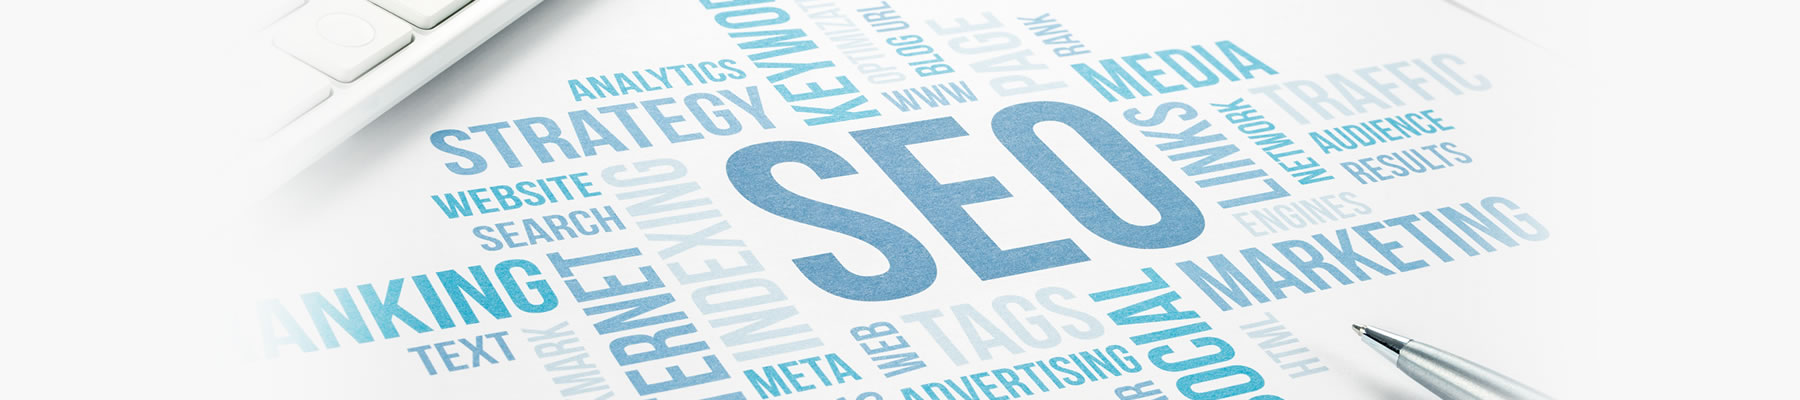 SEO | Search Engine Optimization | Calgary Marketing